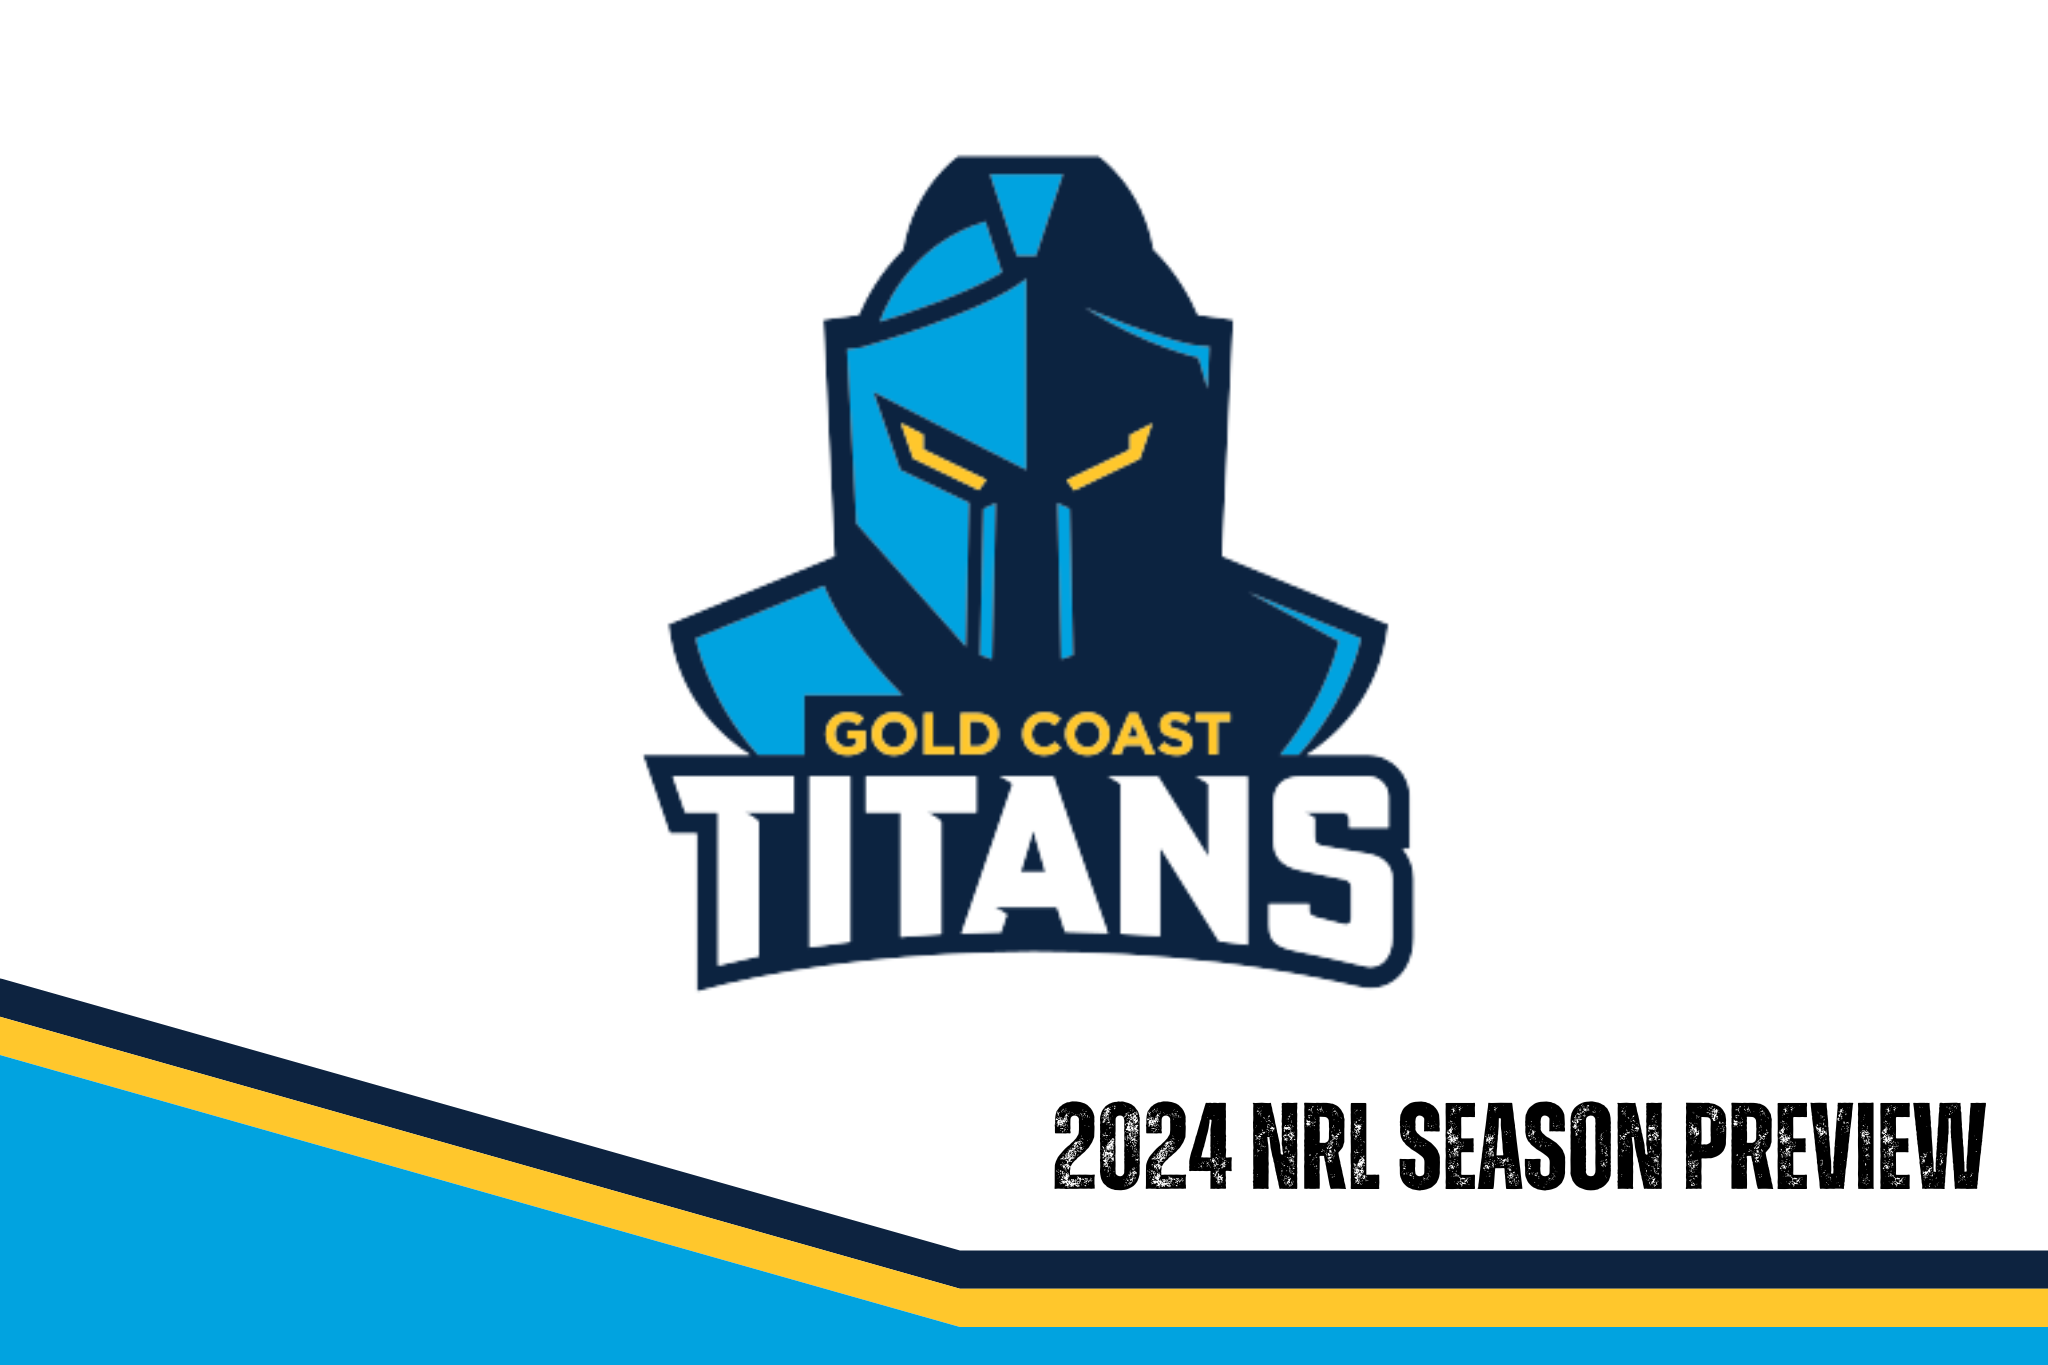 Gold Coast Titans 2024 season preview